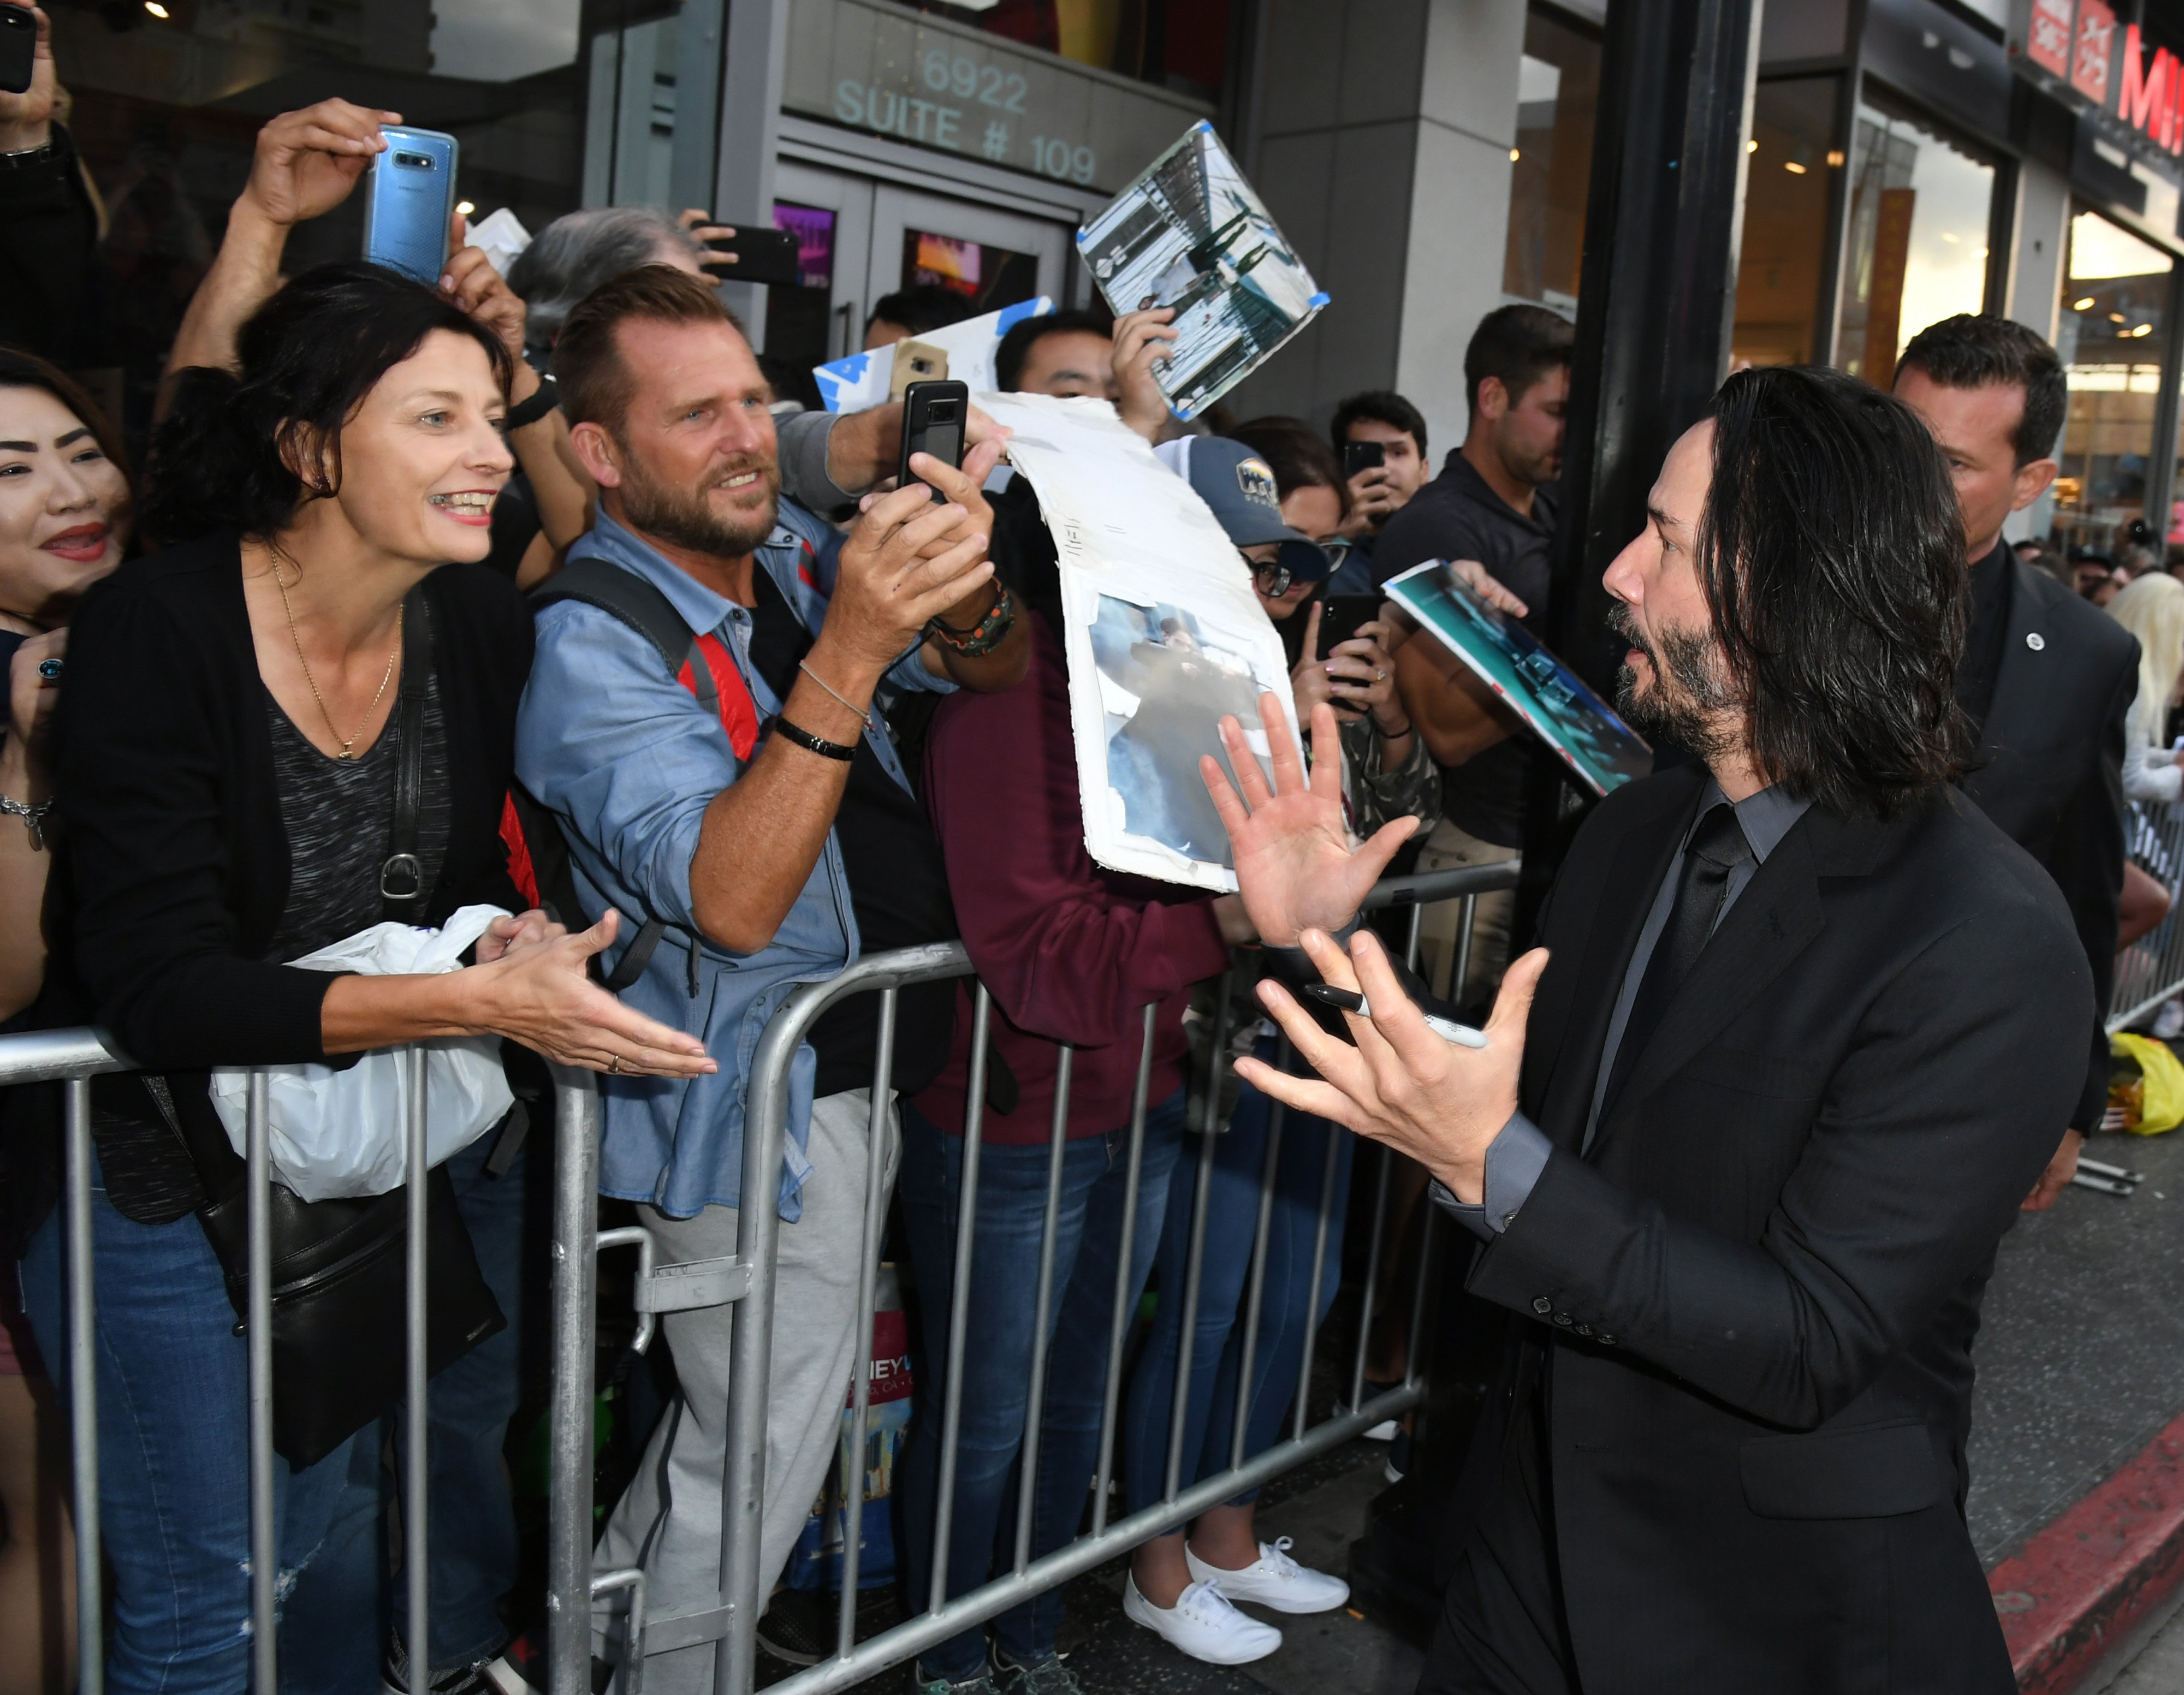 Keanu Reeves signs autographs